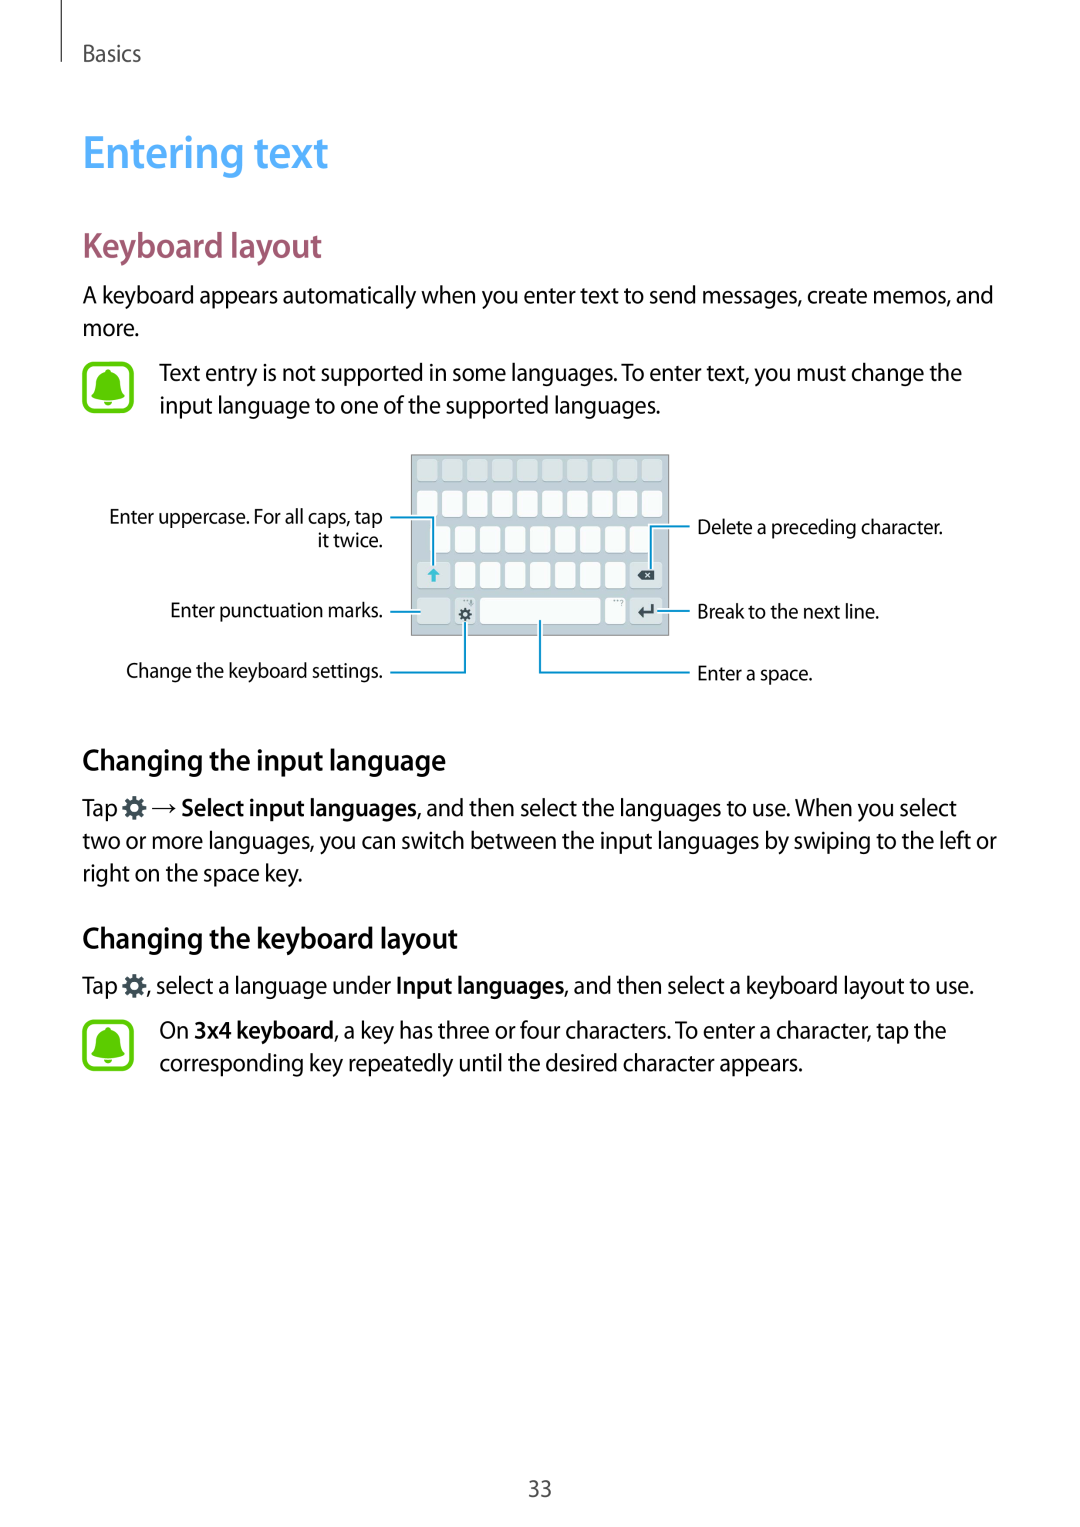 Samsung SM-G920FZWAXXV Entering text, Keyboard layout, Changing the input language, Changing the keyboard layout, Basics 